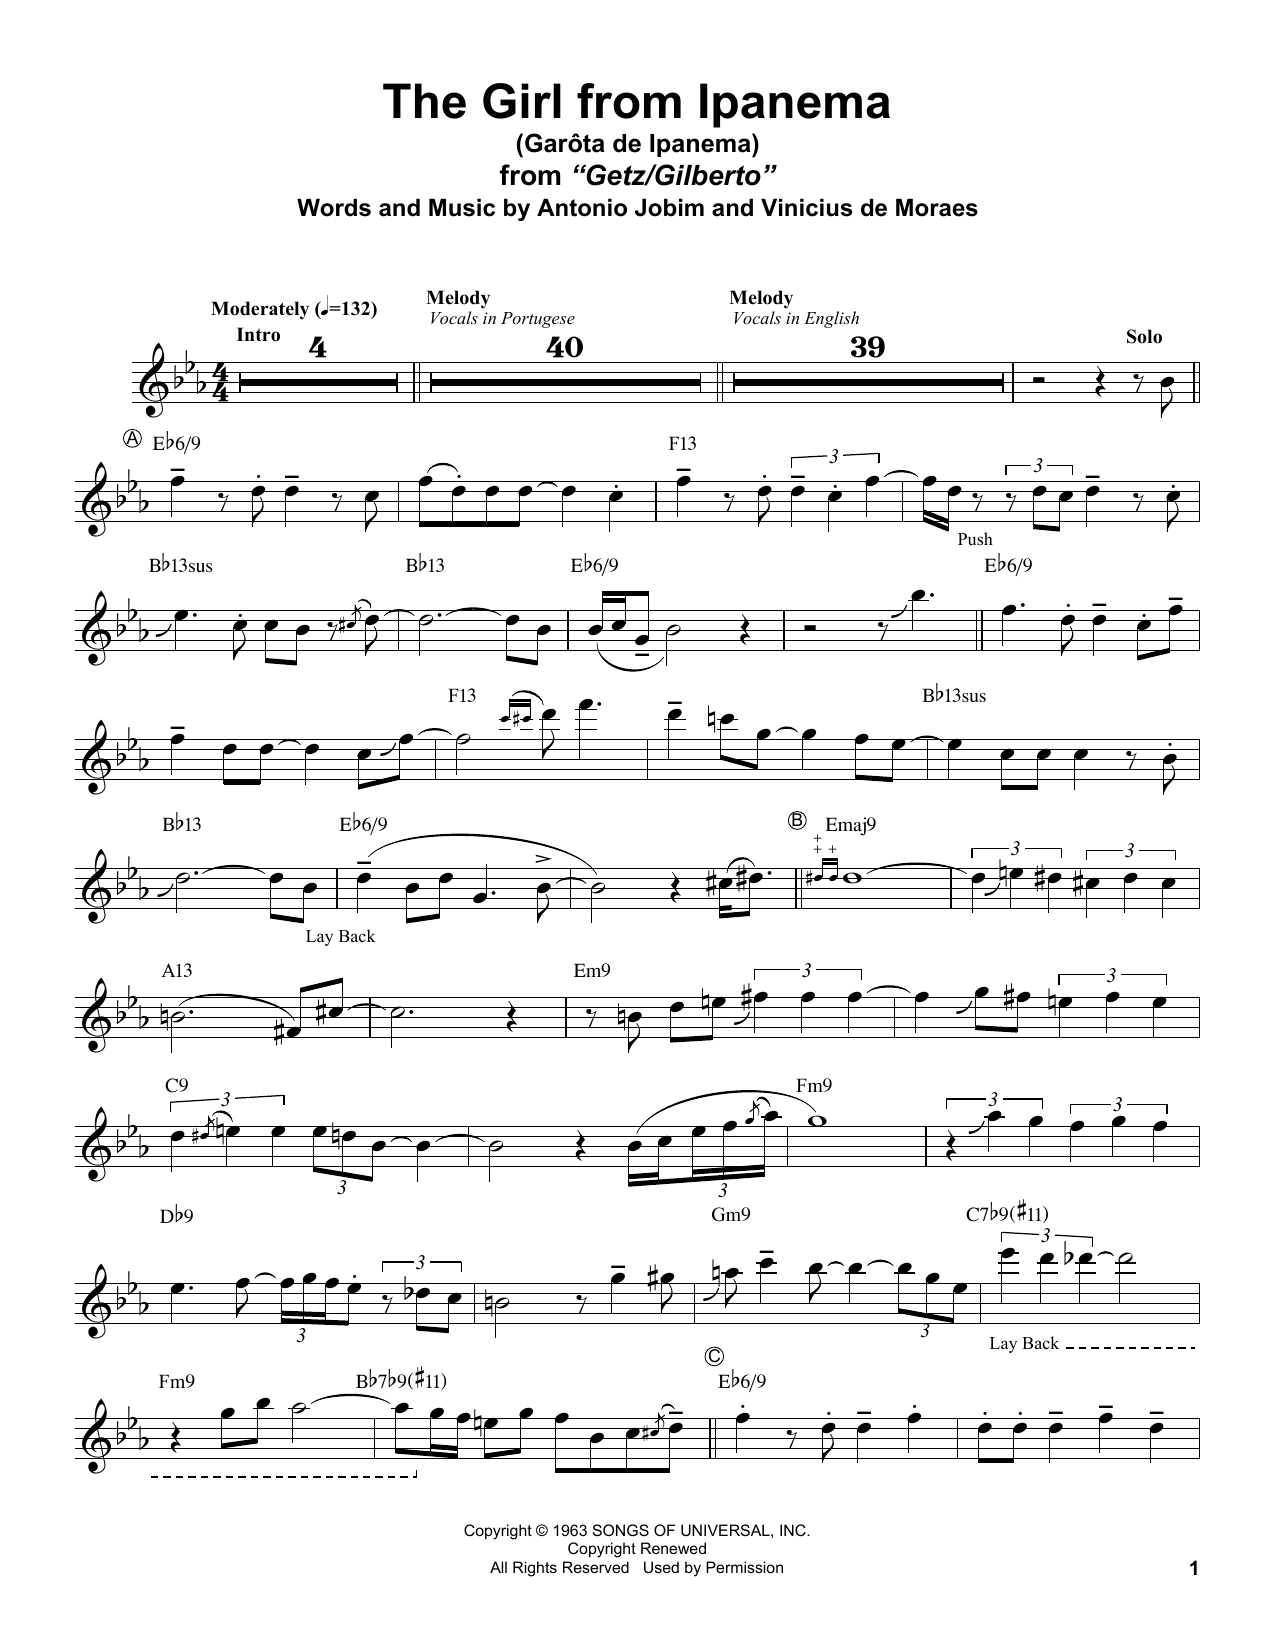 Stan Getz Garota De Ipanema Sheet Music Notes & Chords for Alto Sax Transcription - Download or Print PDF